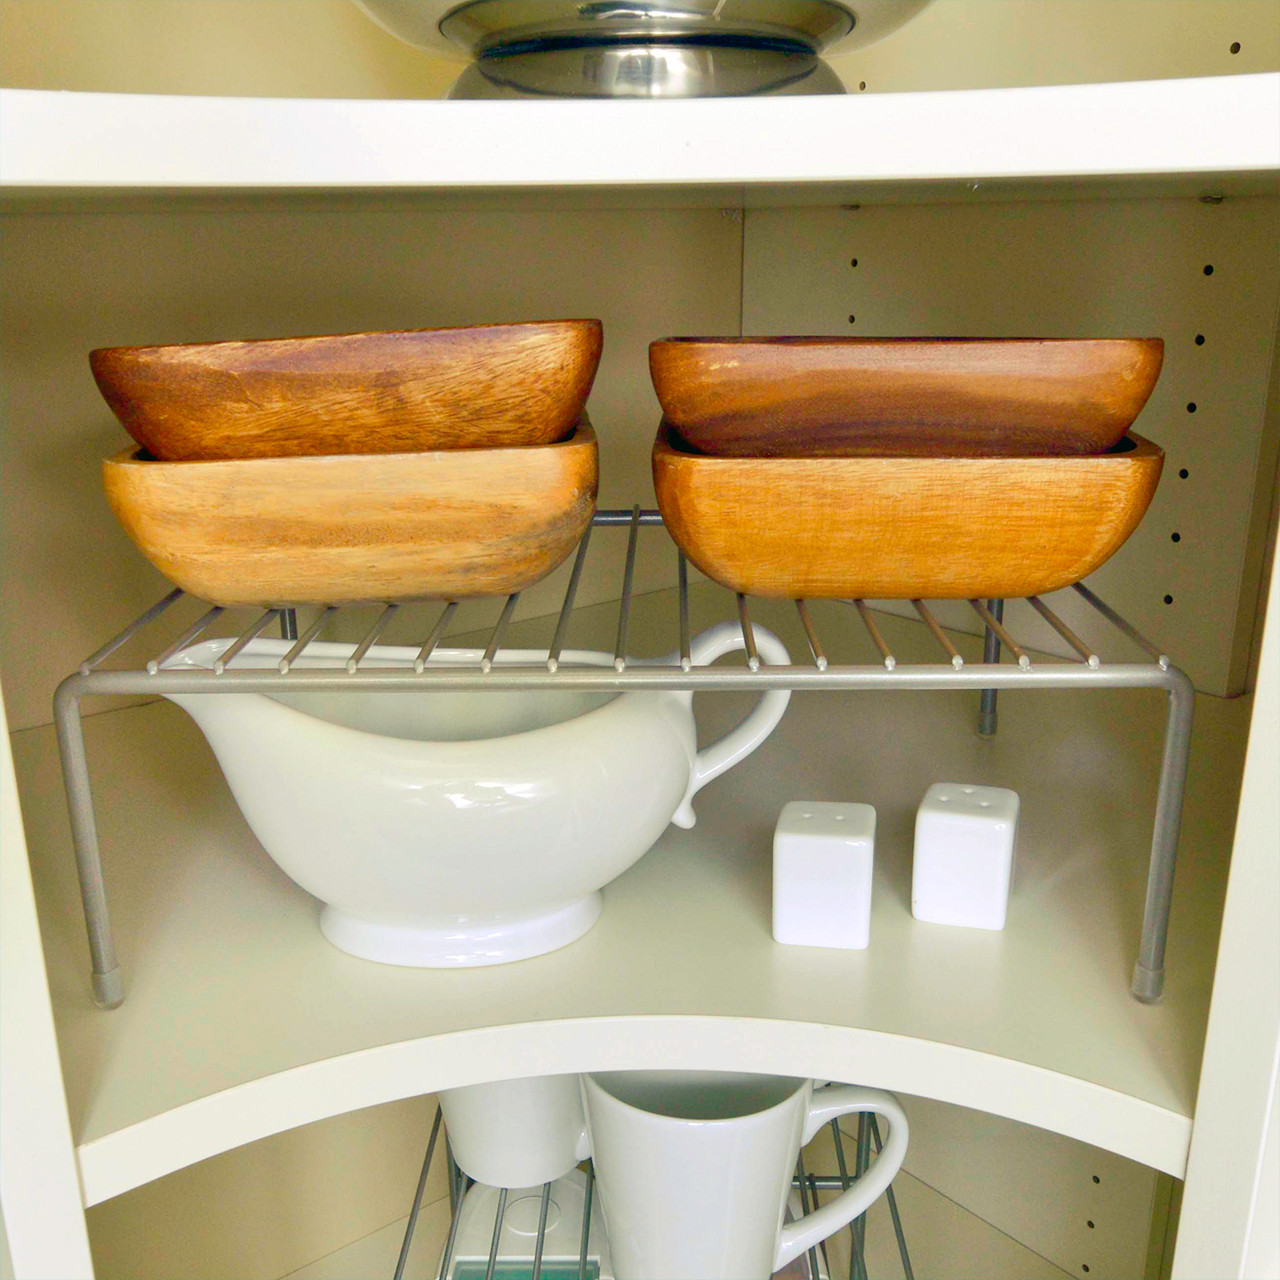 Kitchen Cabinet Double Shelf - Organized Living